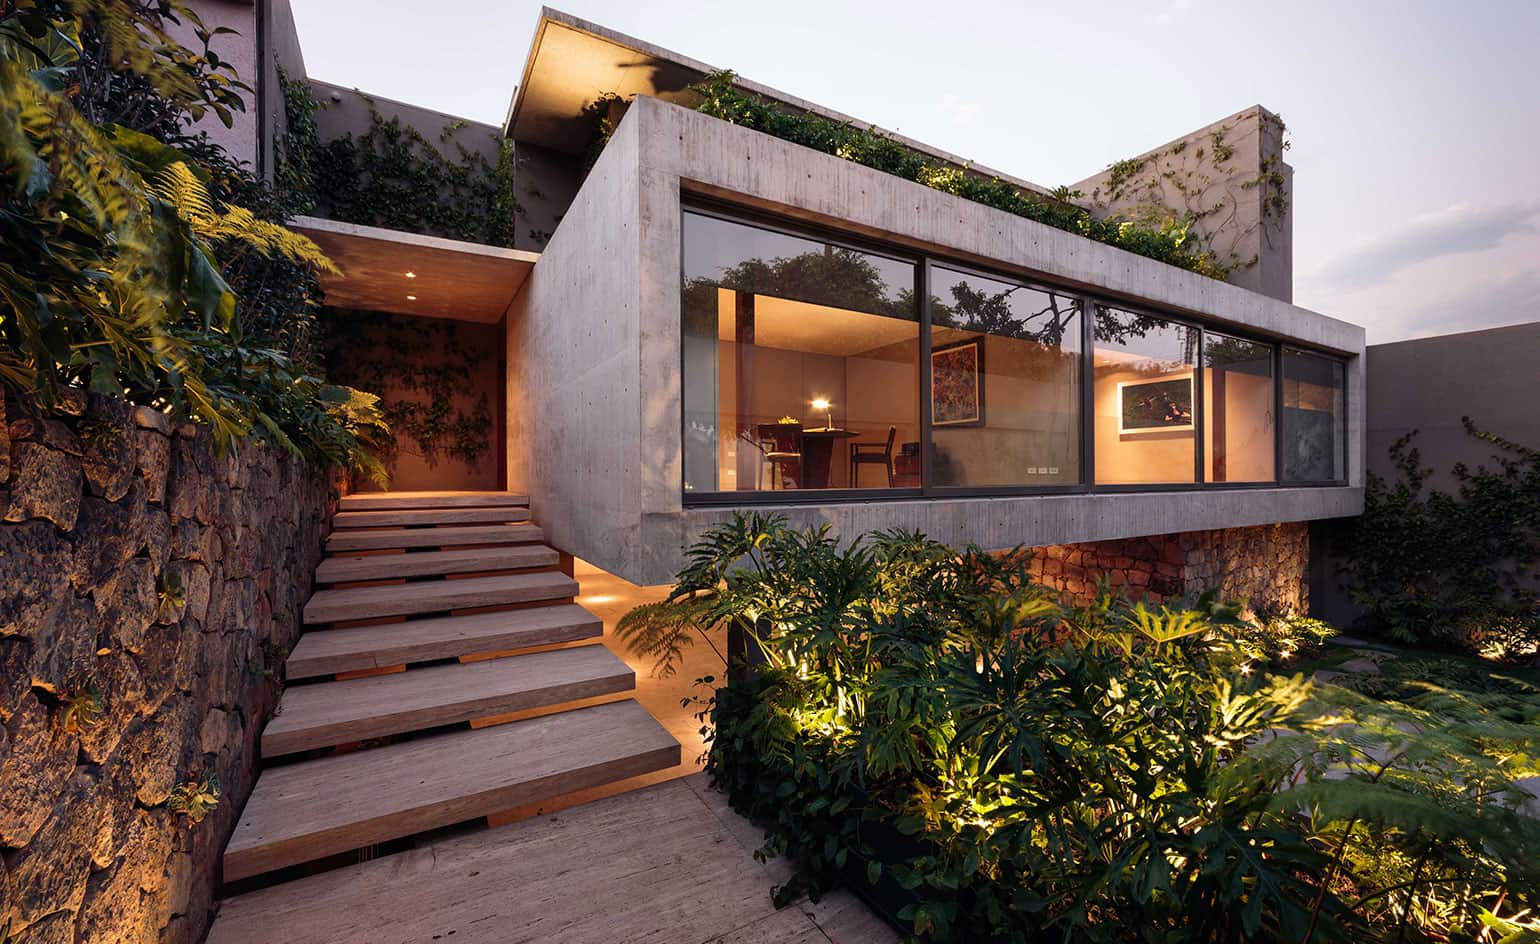 modernist house mexico city - Casa Caucaso - Jose Juan Rivera Rio architect - exterior